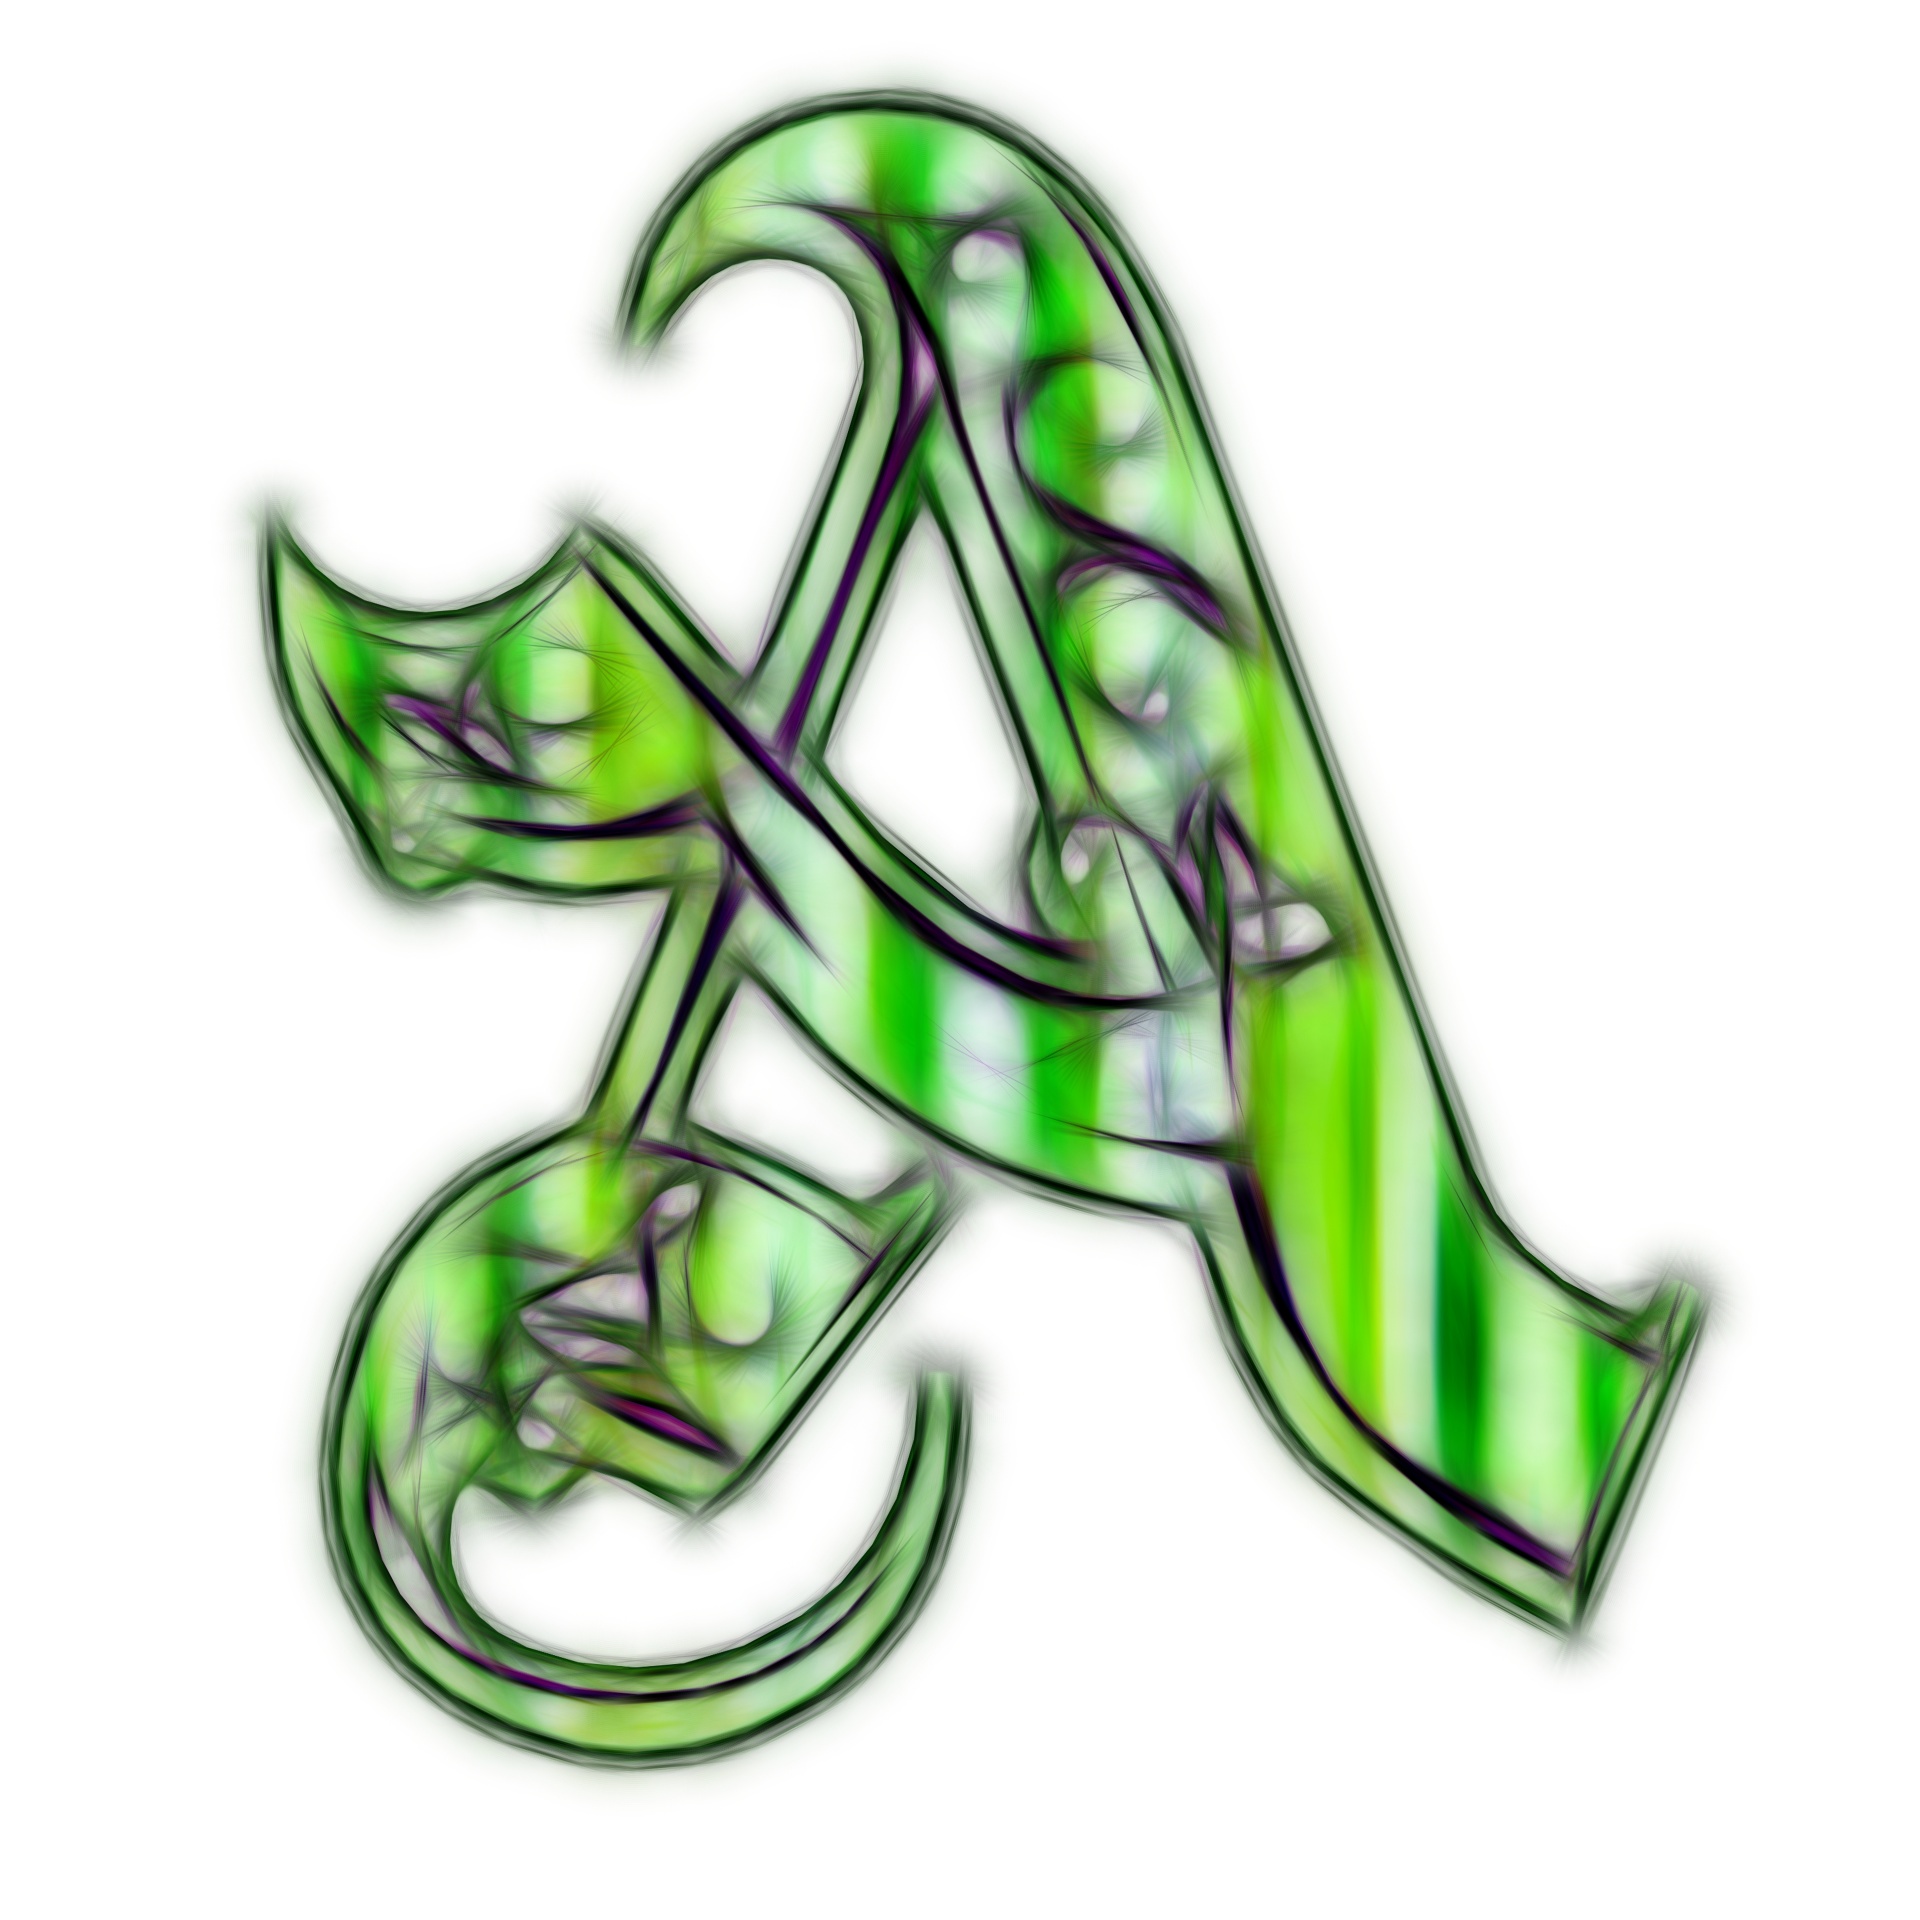 Glowing metallic green letter A